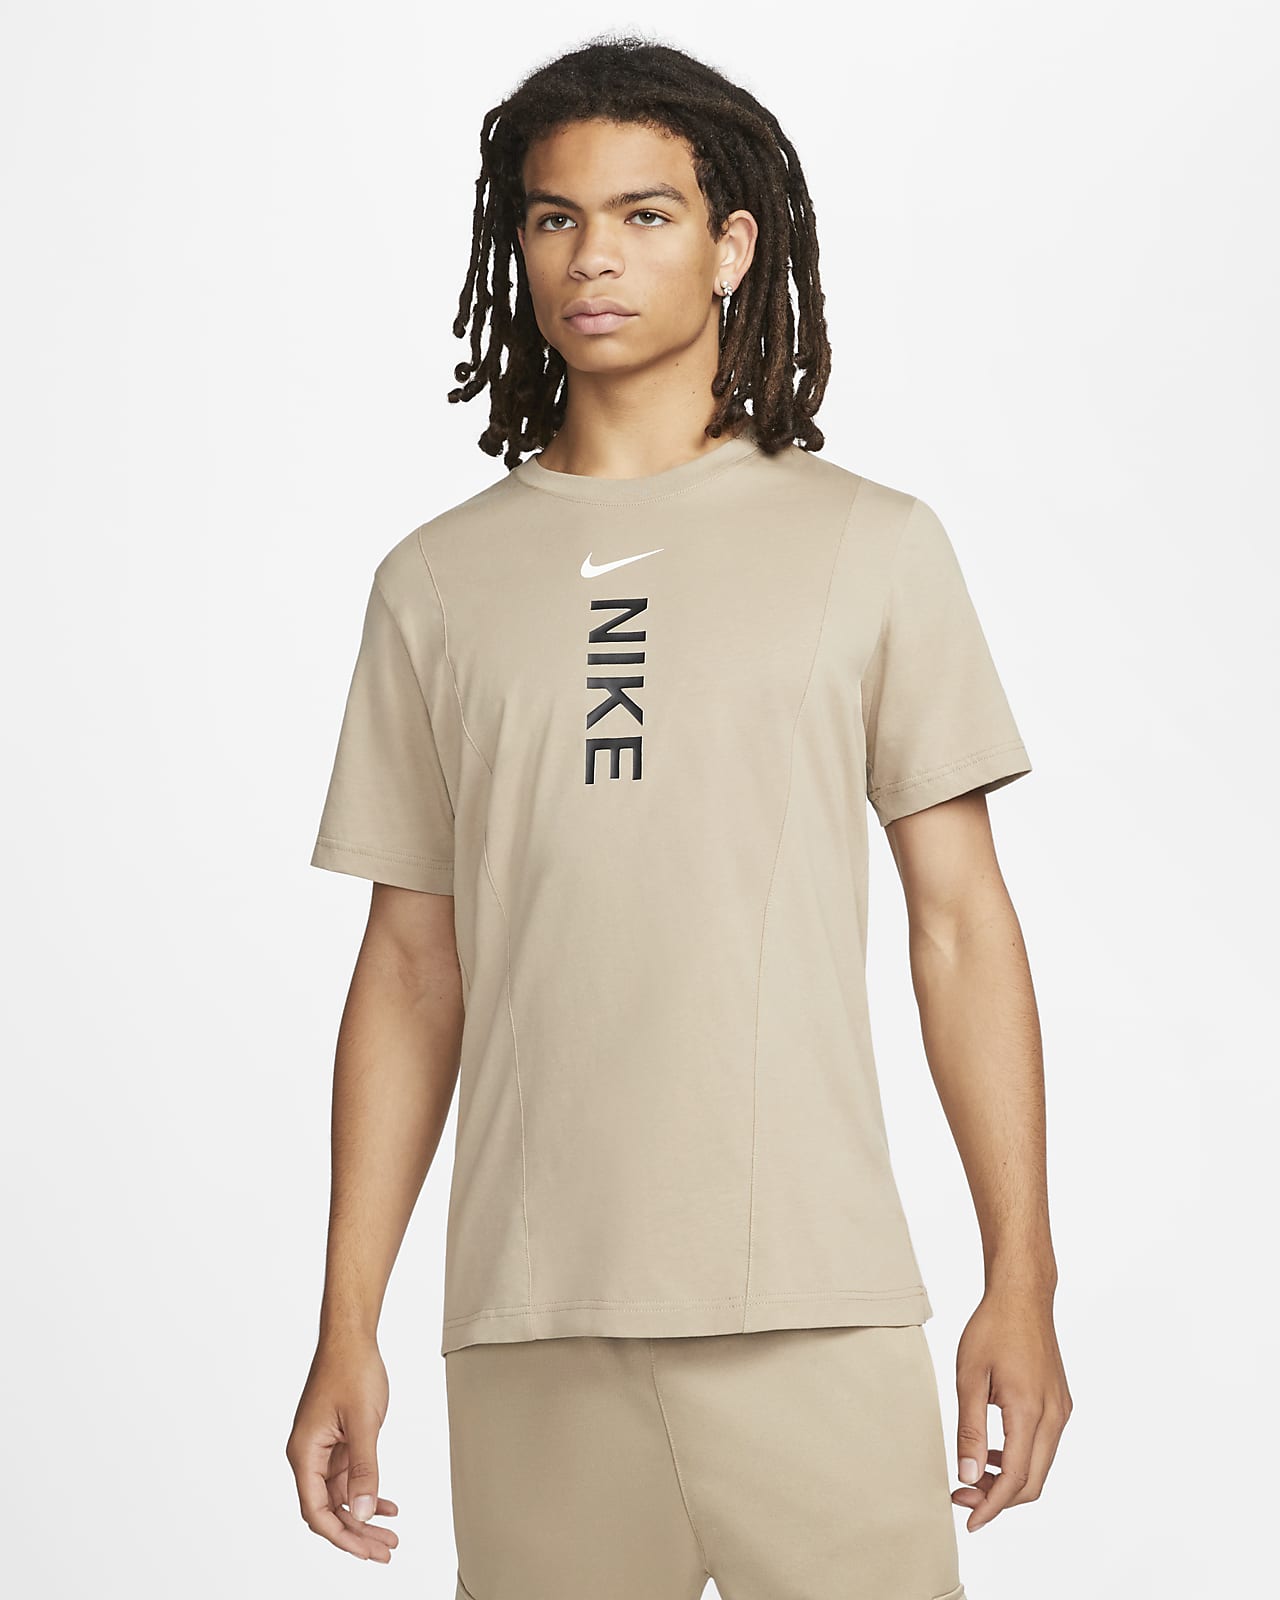 Tom Audreath Arte Saga Nike Sportswear Hybrid Camiseta - Hombre. Nike ES